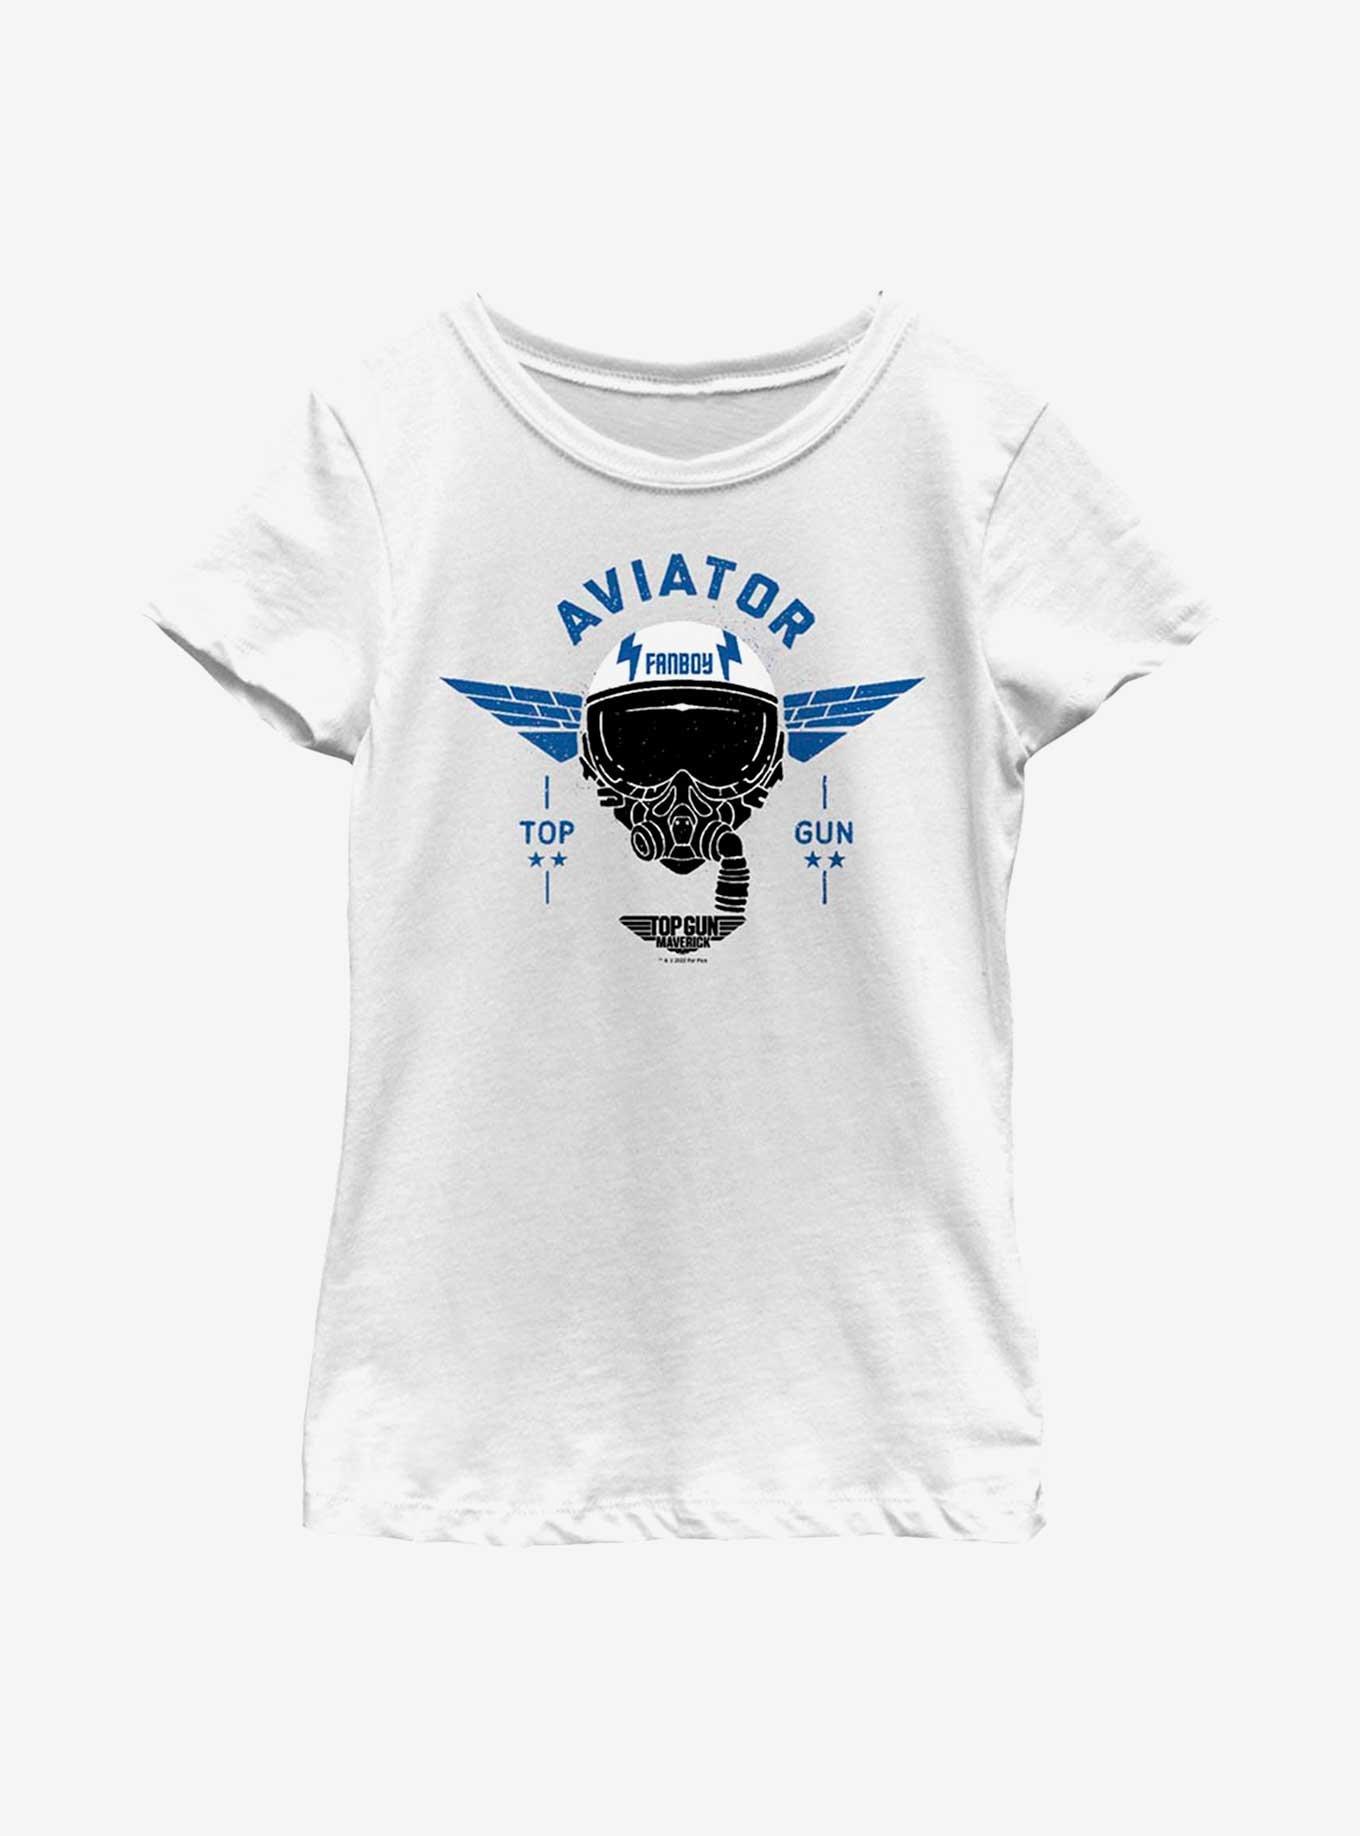 Top Gun: Maverick Fanboy Aviator Youth Girls T-Shirt, WHITE, hi-res